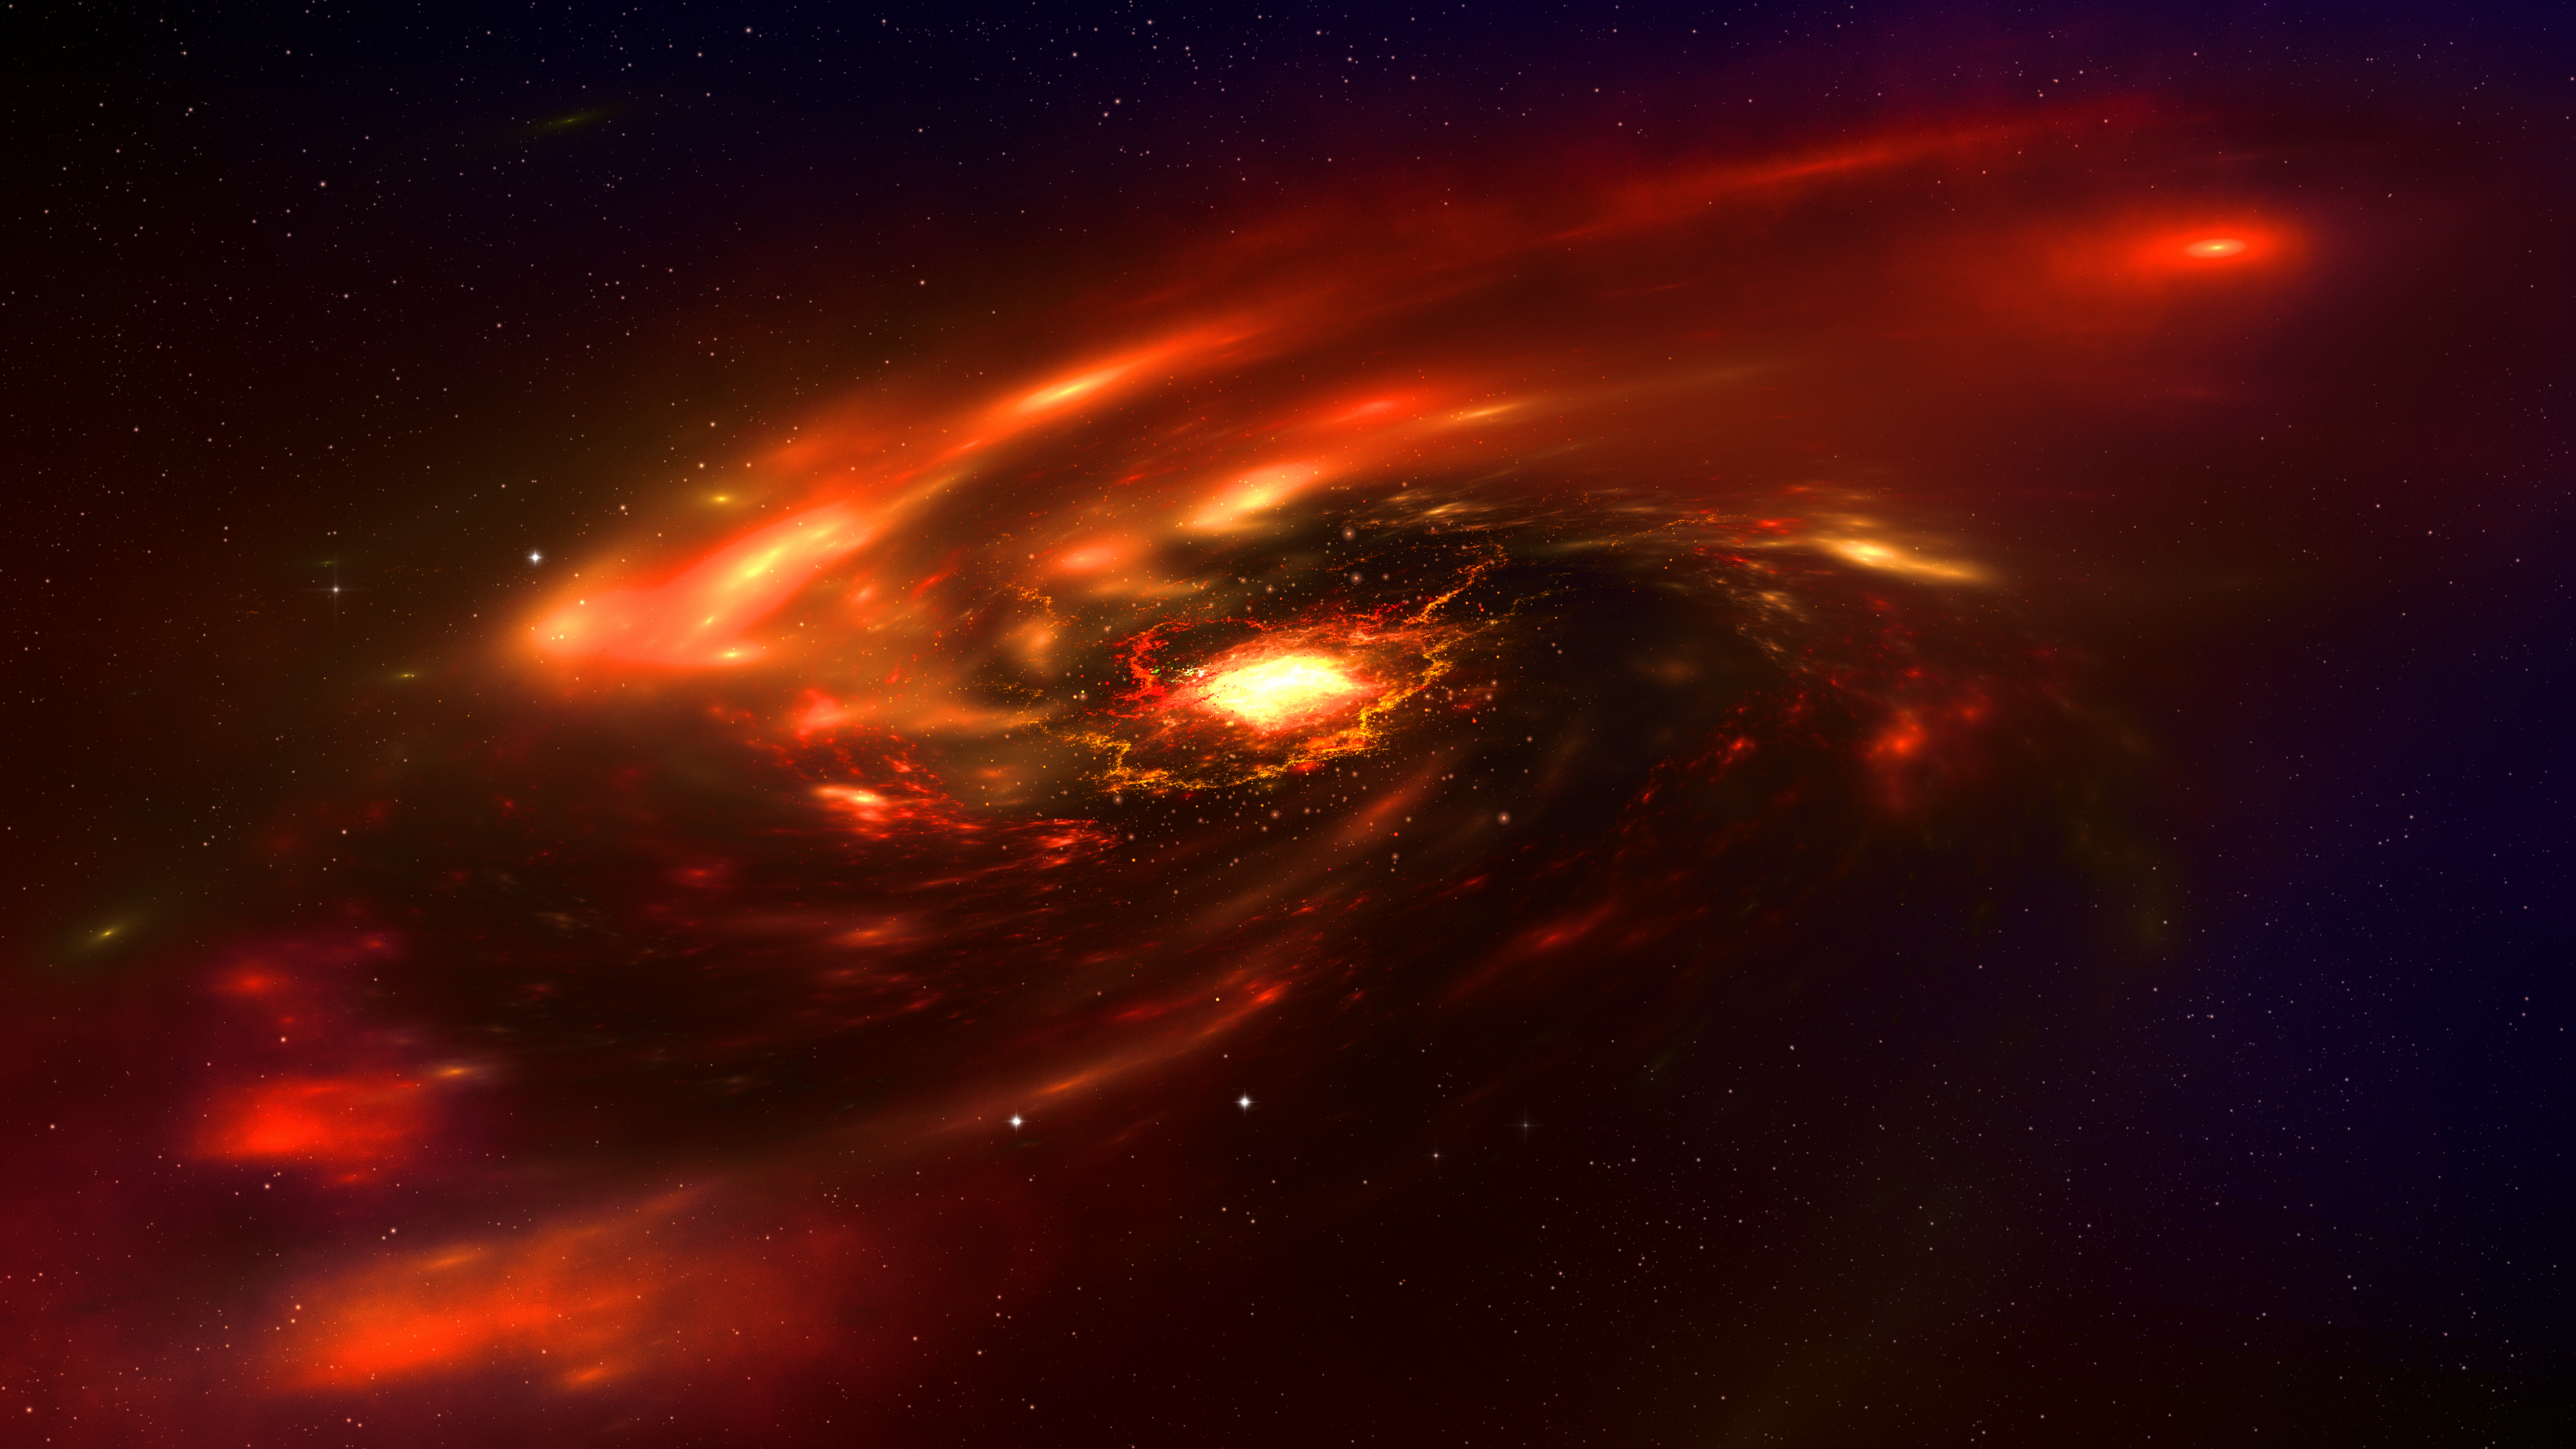 Hypnoshot Digital Digital Art Artwork Illustration Render Space Stars Planet Nebula Space Art Galaxy 3840x2160